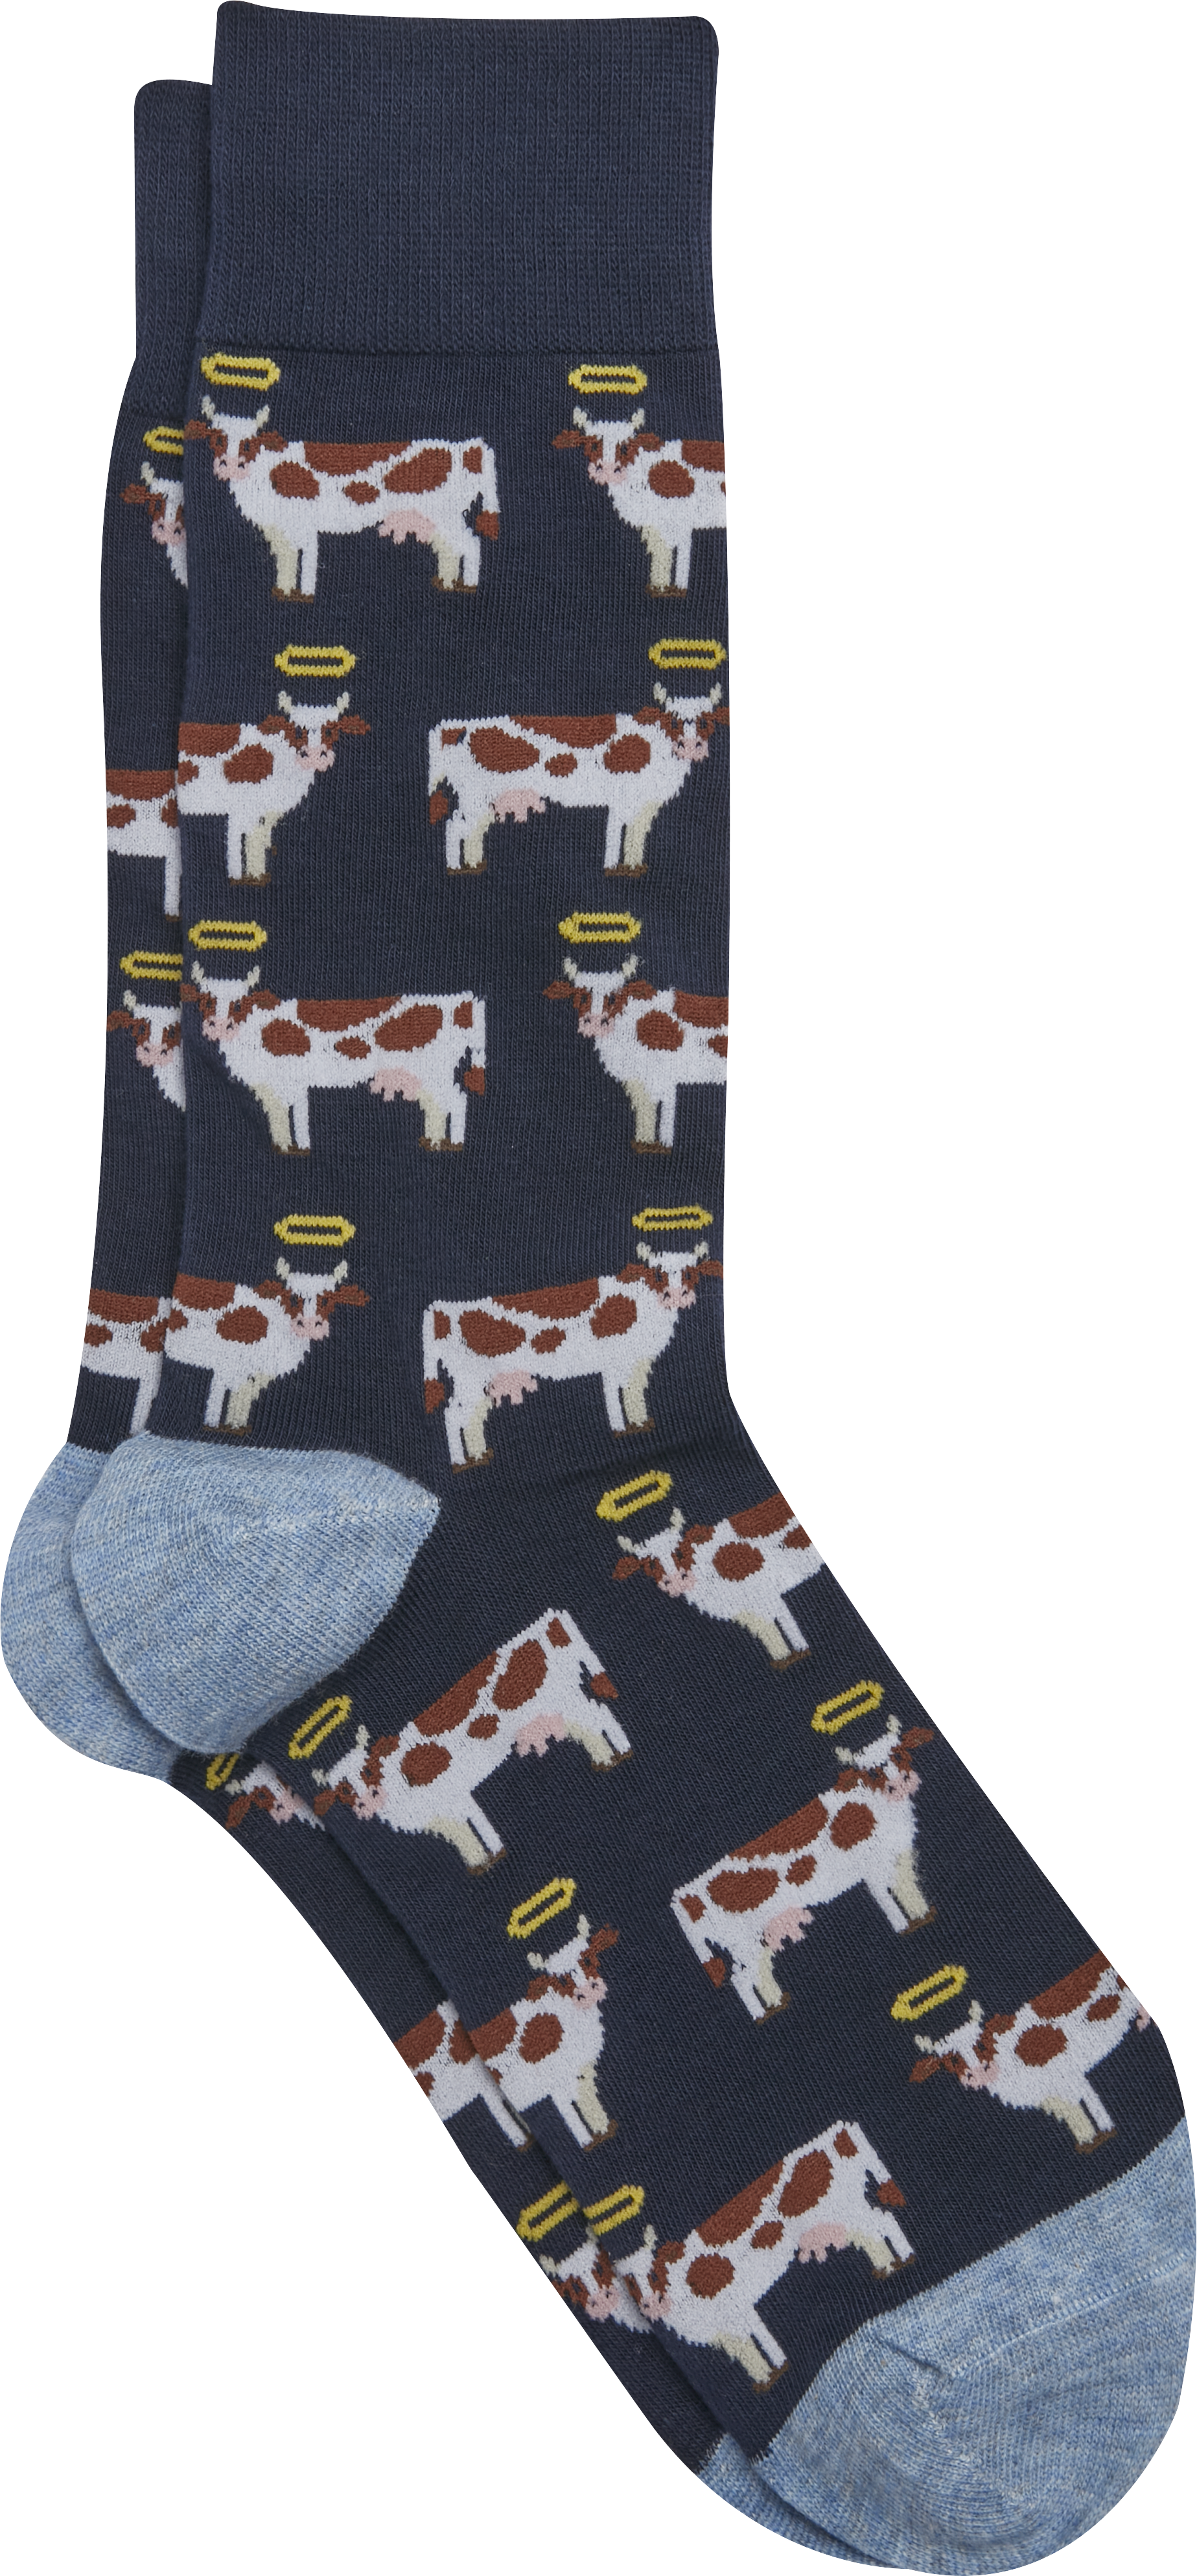 Holy Cow Socks